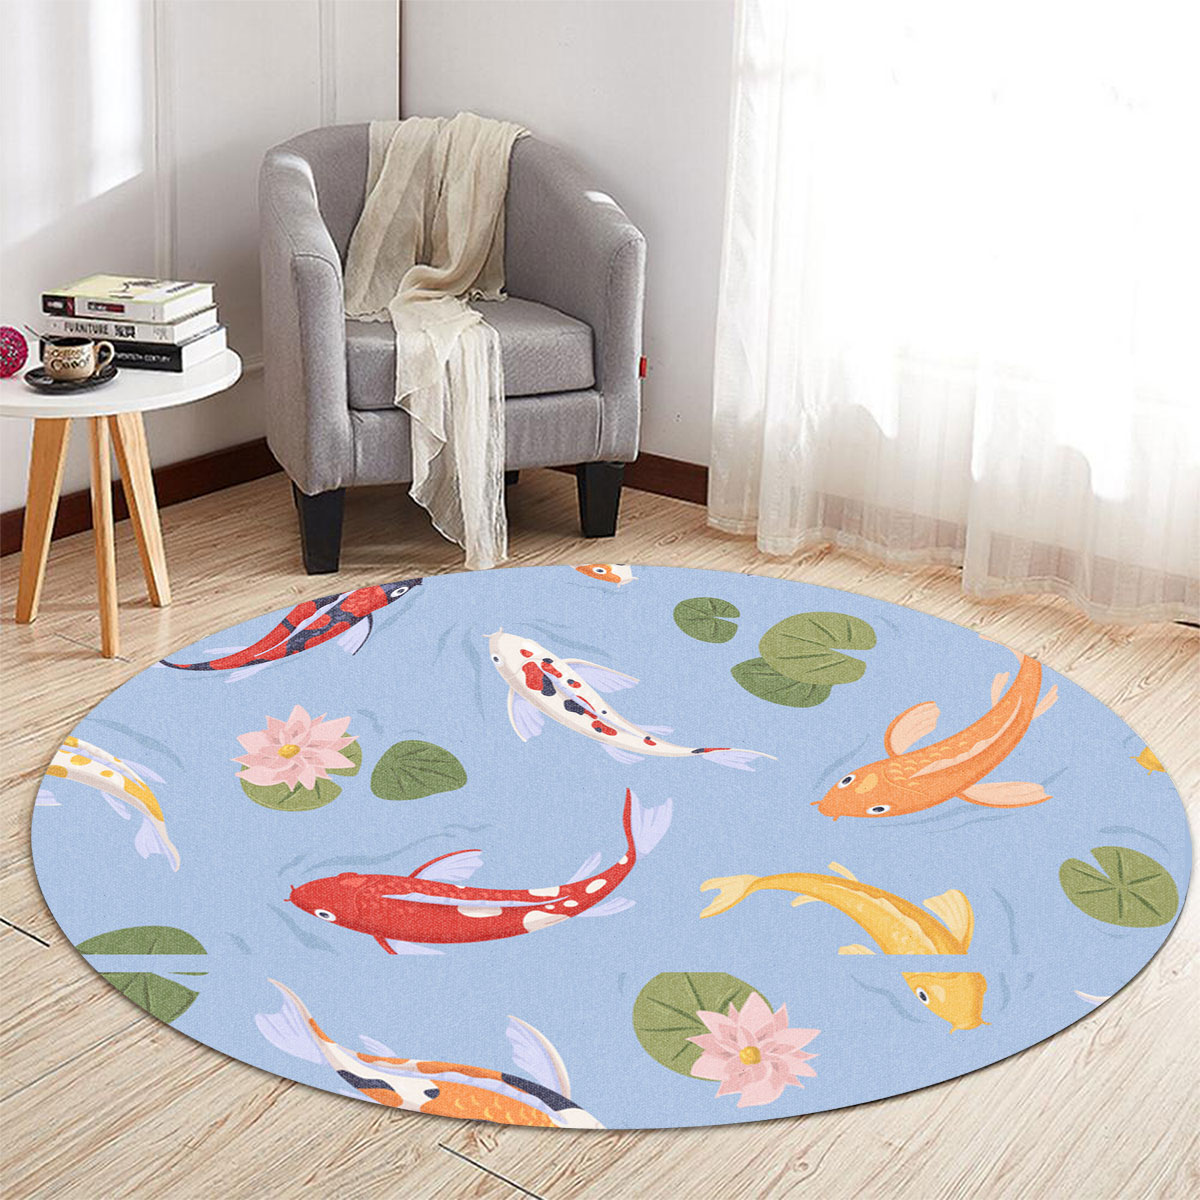 Colorful Koi Fish Round Carpet